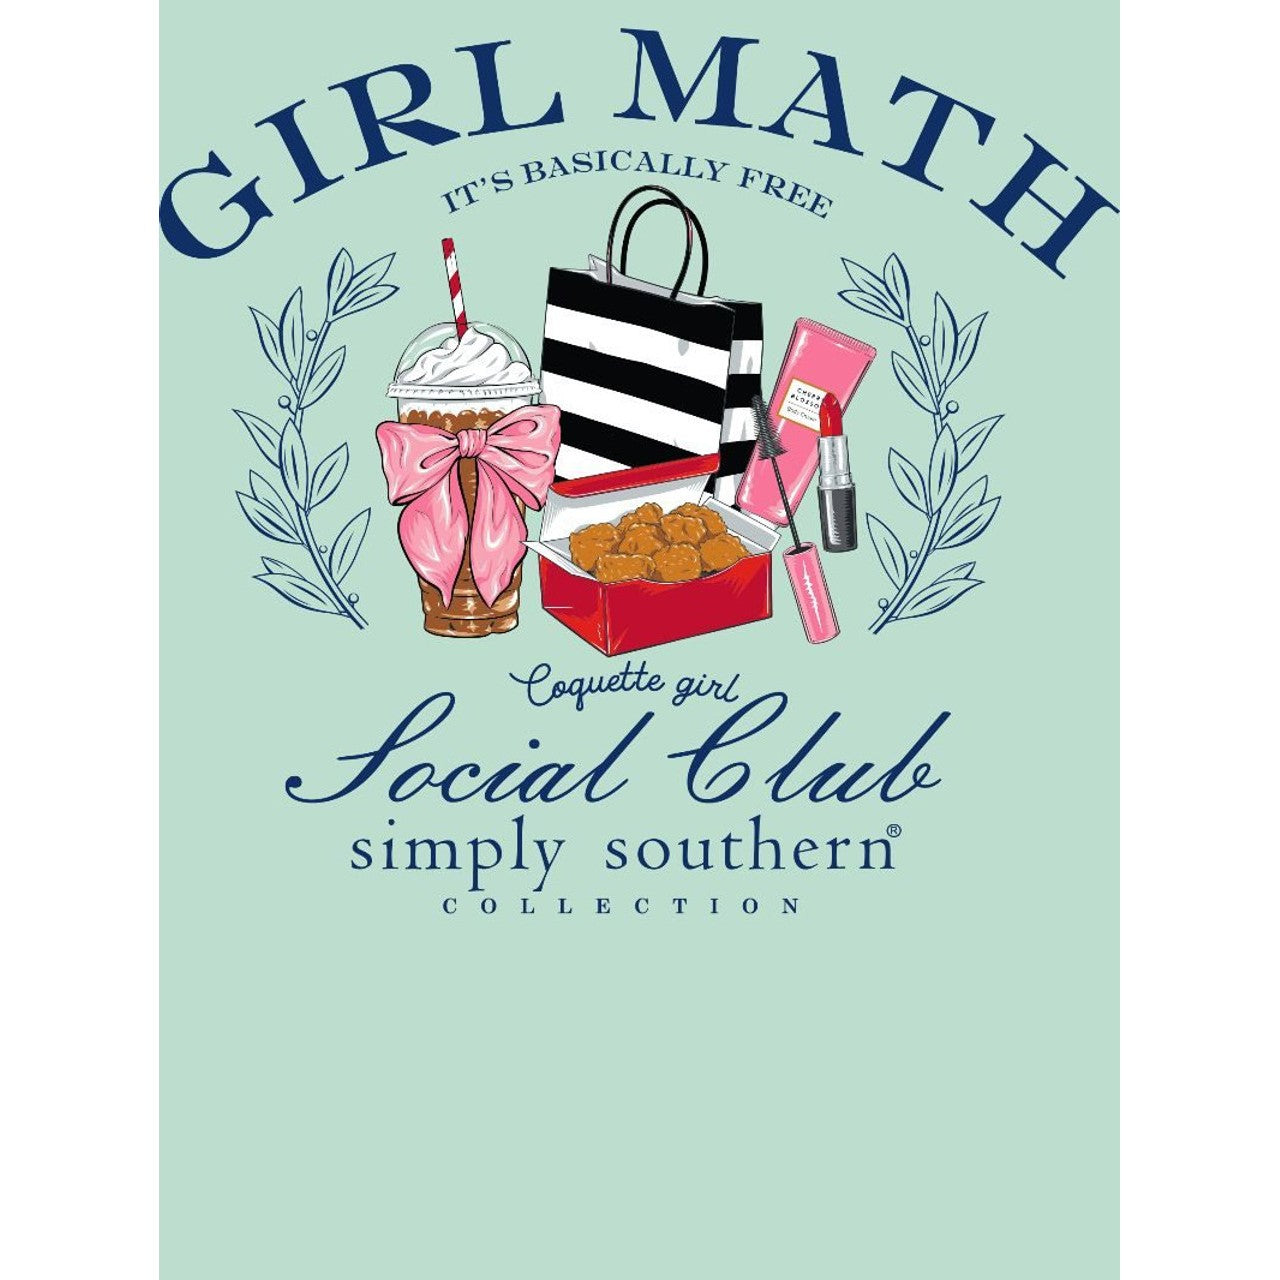 Simply Southern Ladies 'Girl Math' Chinchilla Blue Green T-Shirt SS-GIRLMATH